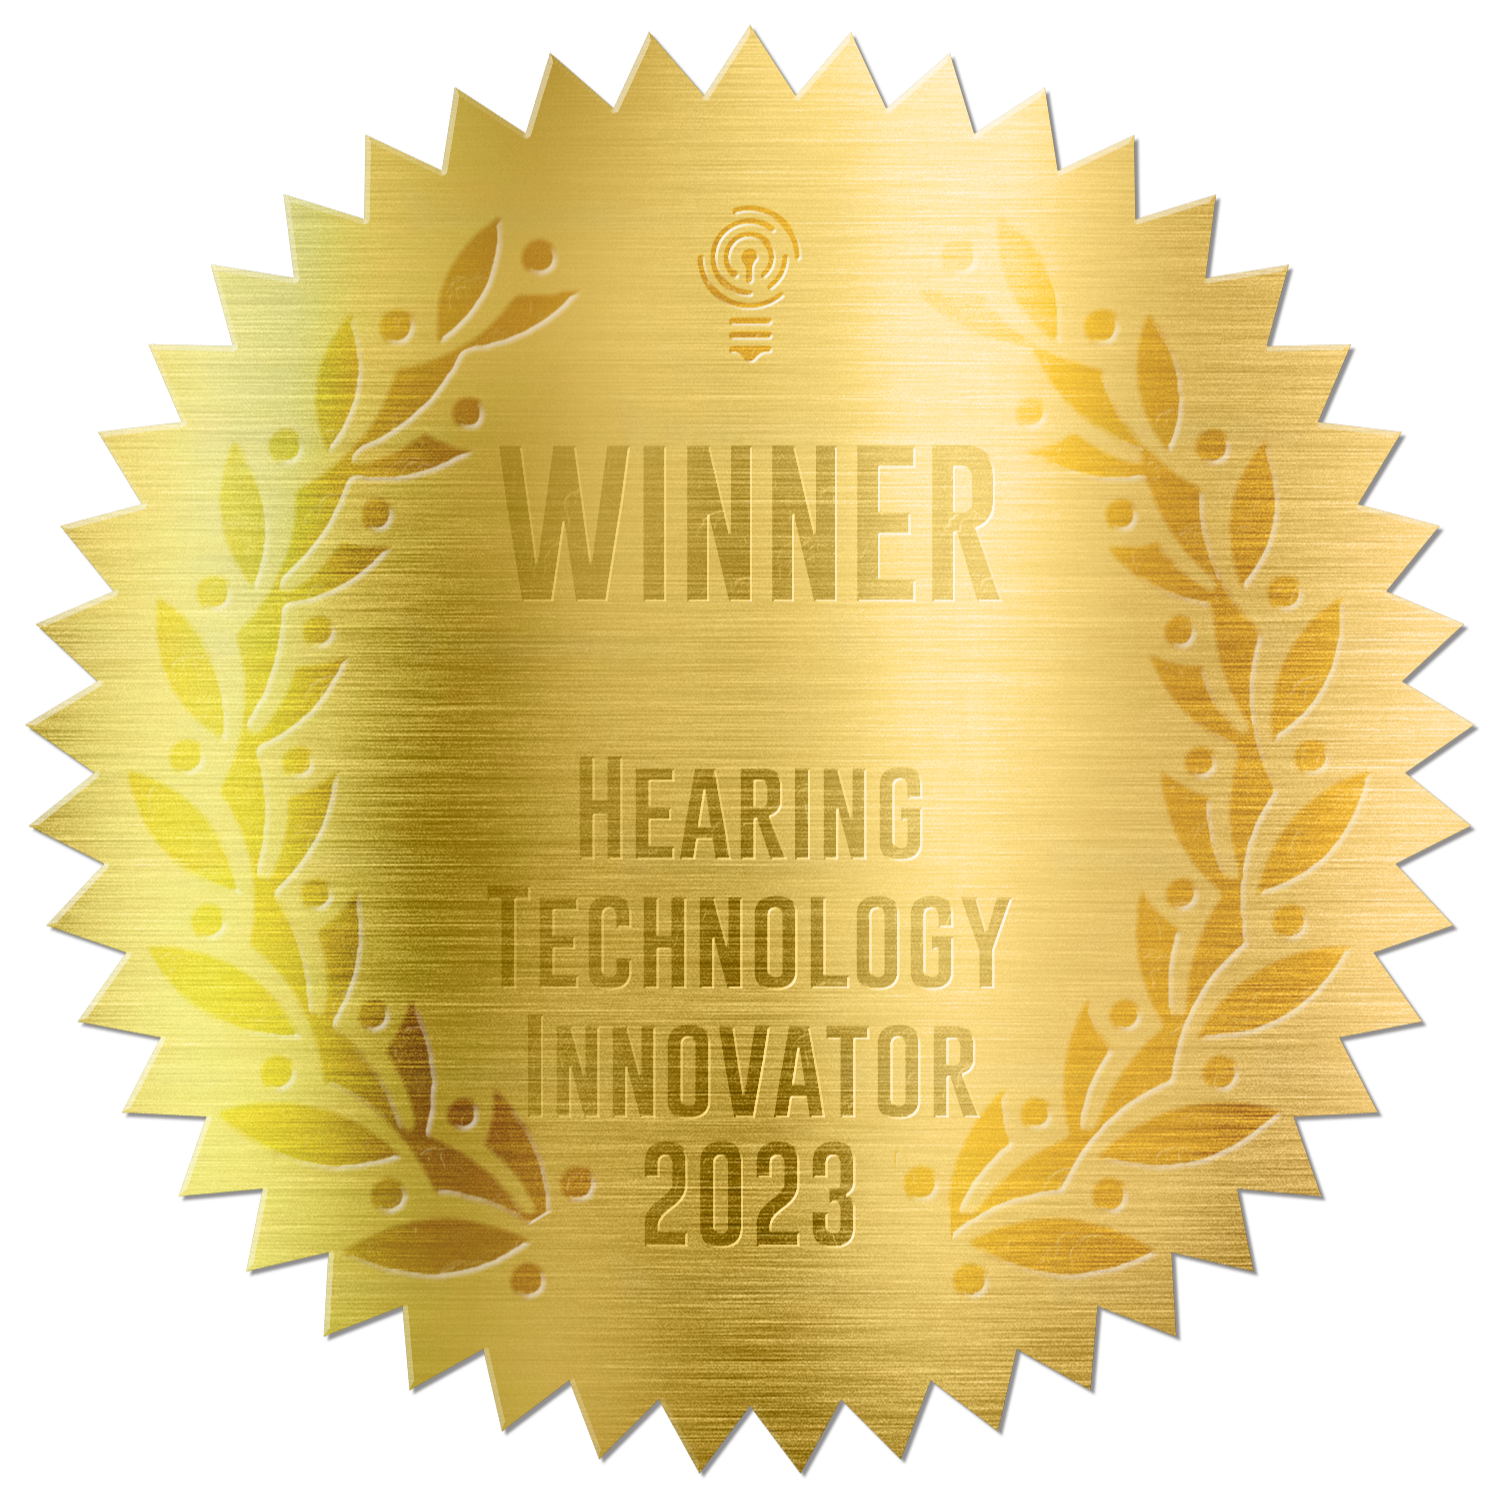 Hearing Technology Innovator 2023